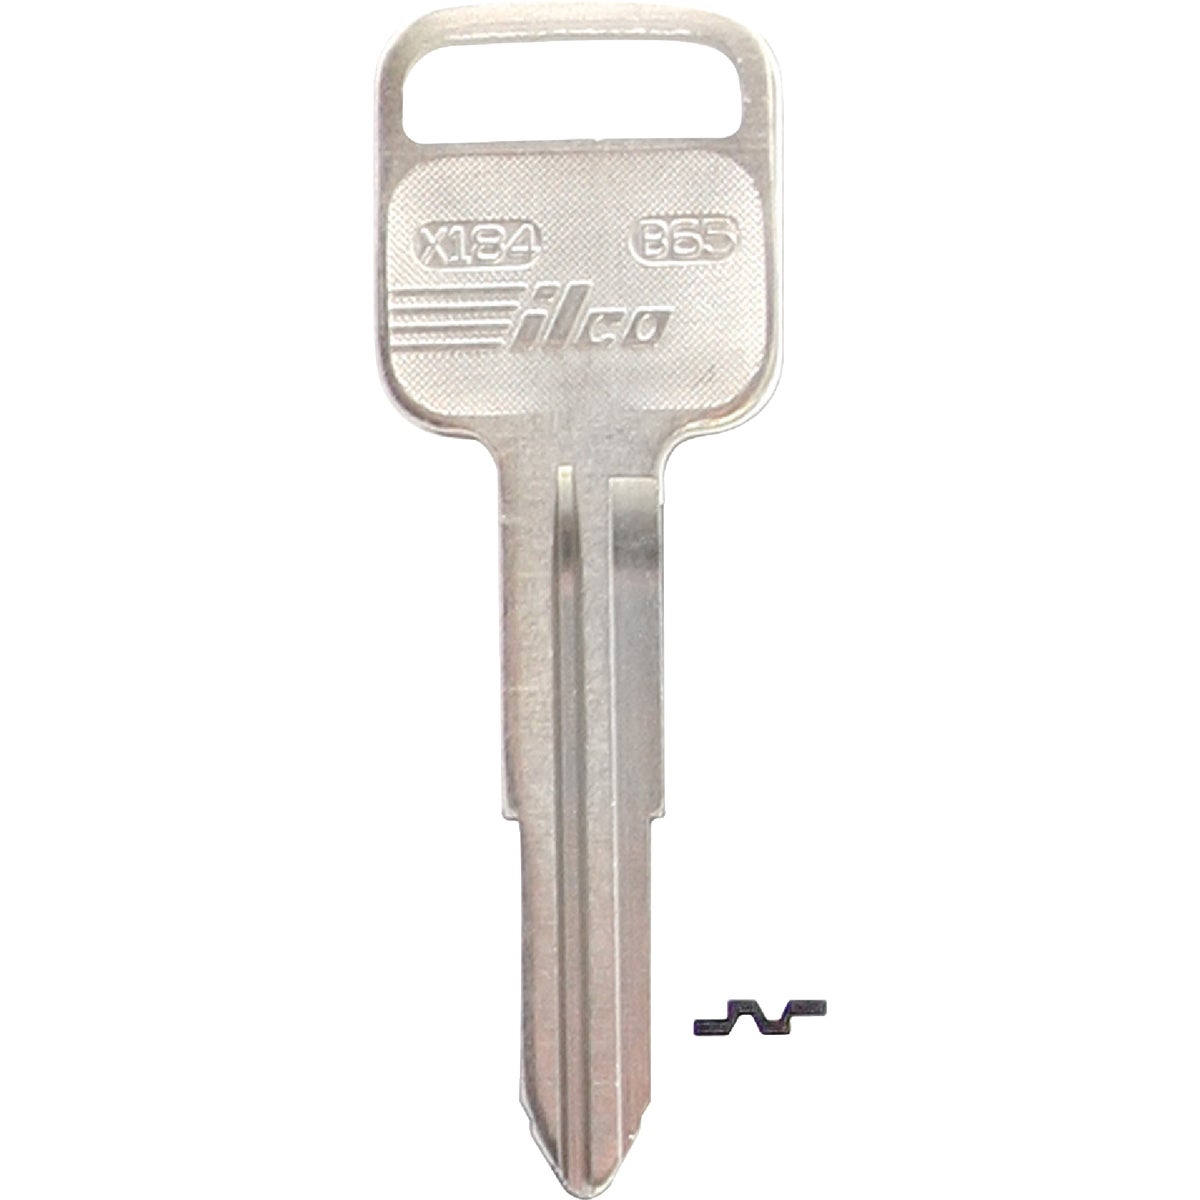 ILCO GM Nickel Plated Automotive Key, B65 / X184 (10-Pack)